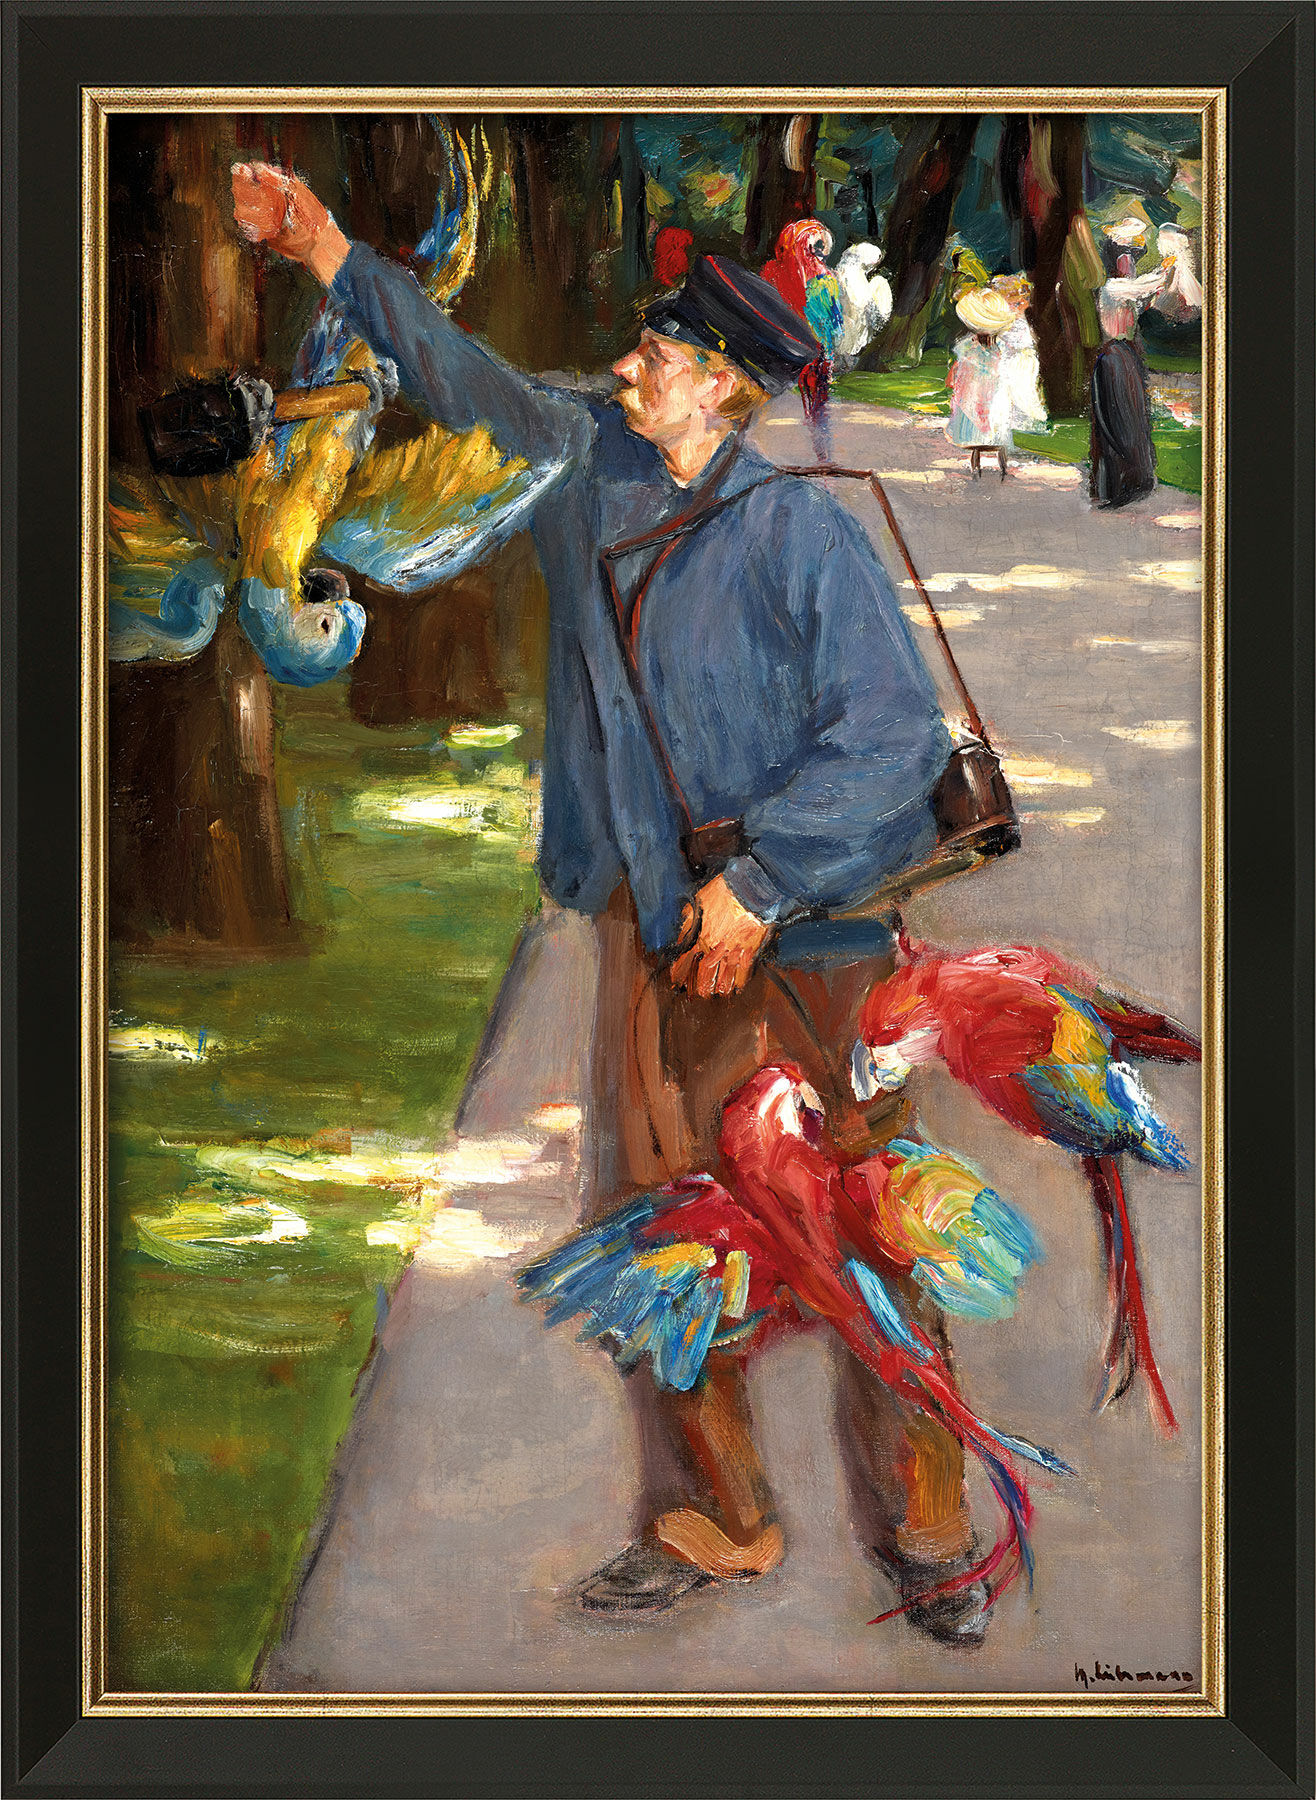 Tableau "Homme perroquet" (1902), encadré von Max Liebermann